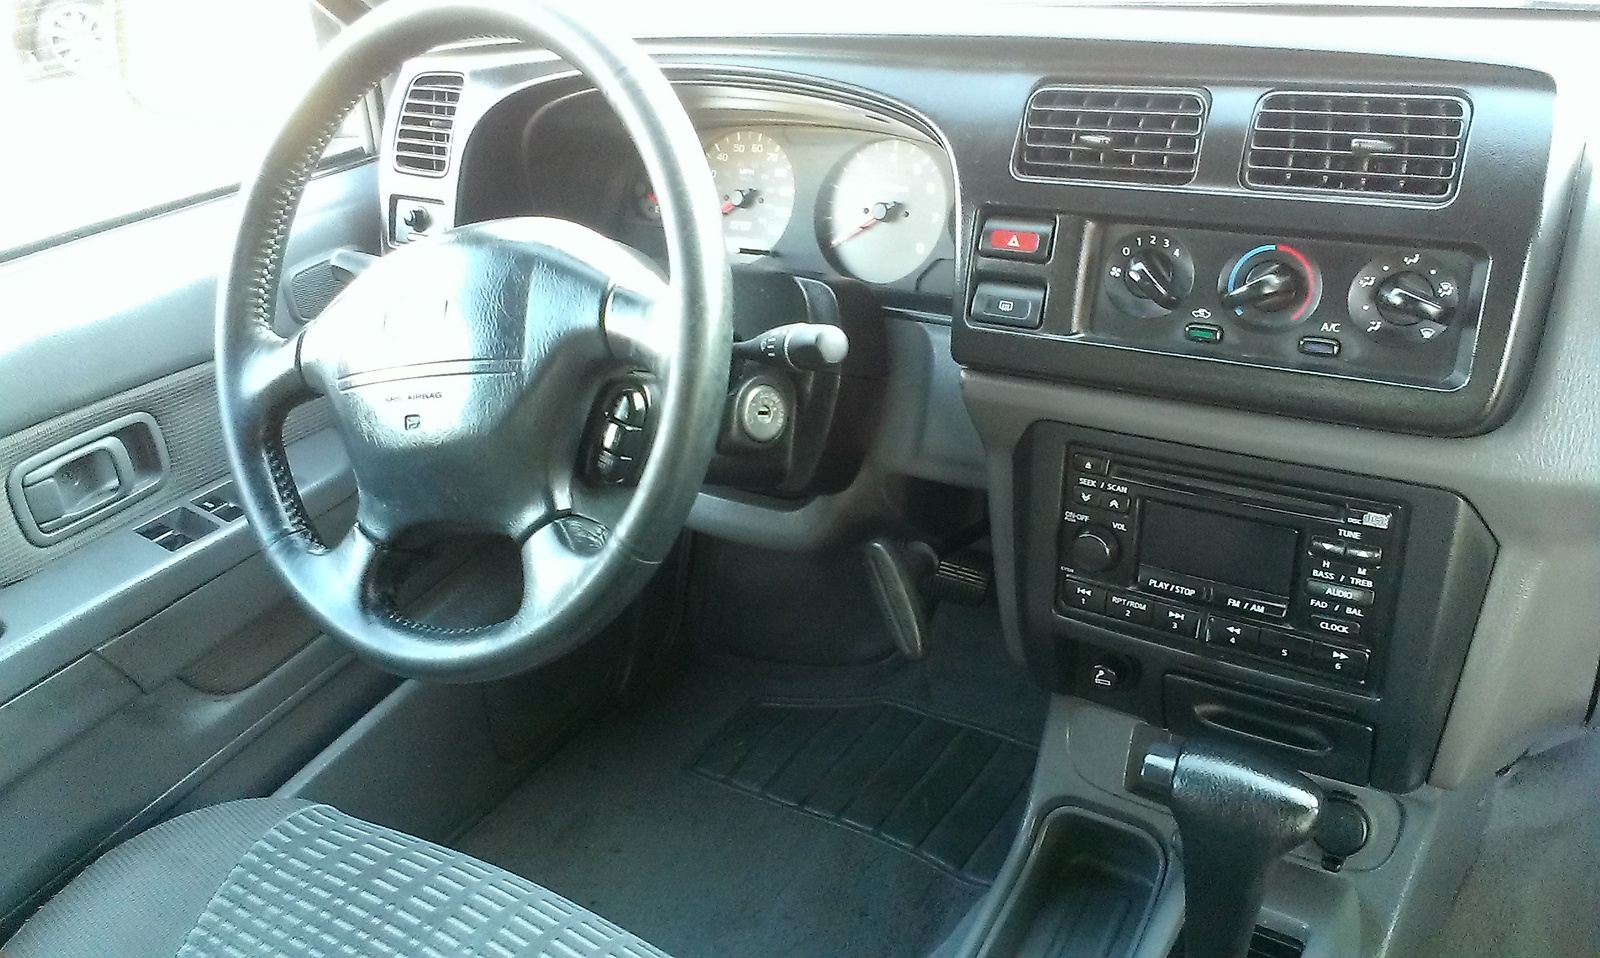 2000 Nissan xterra interior